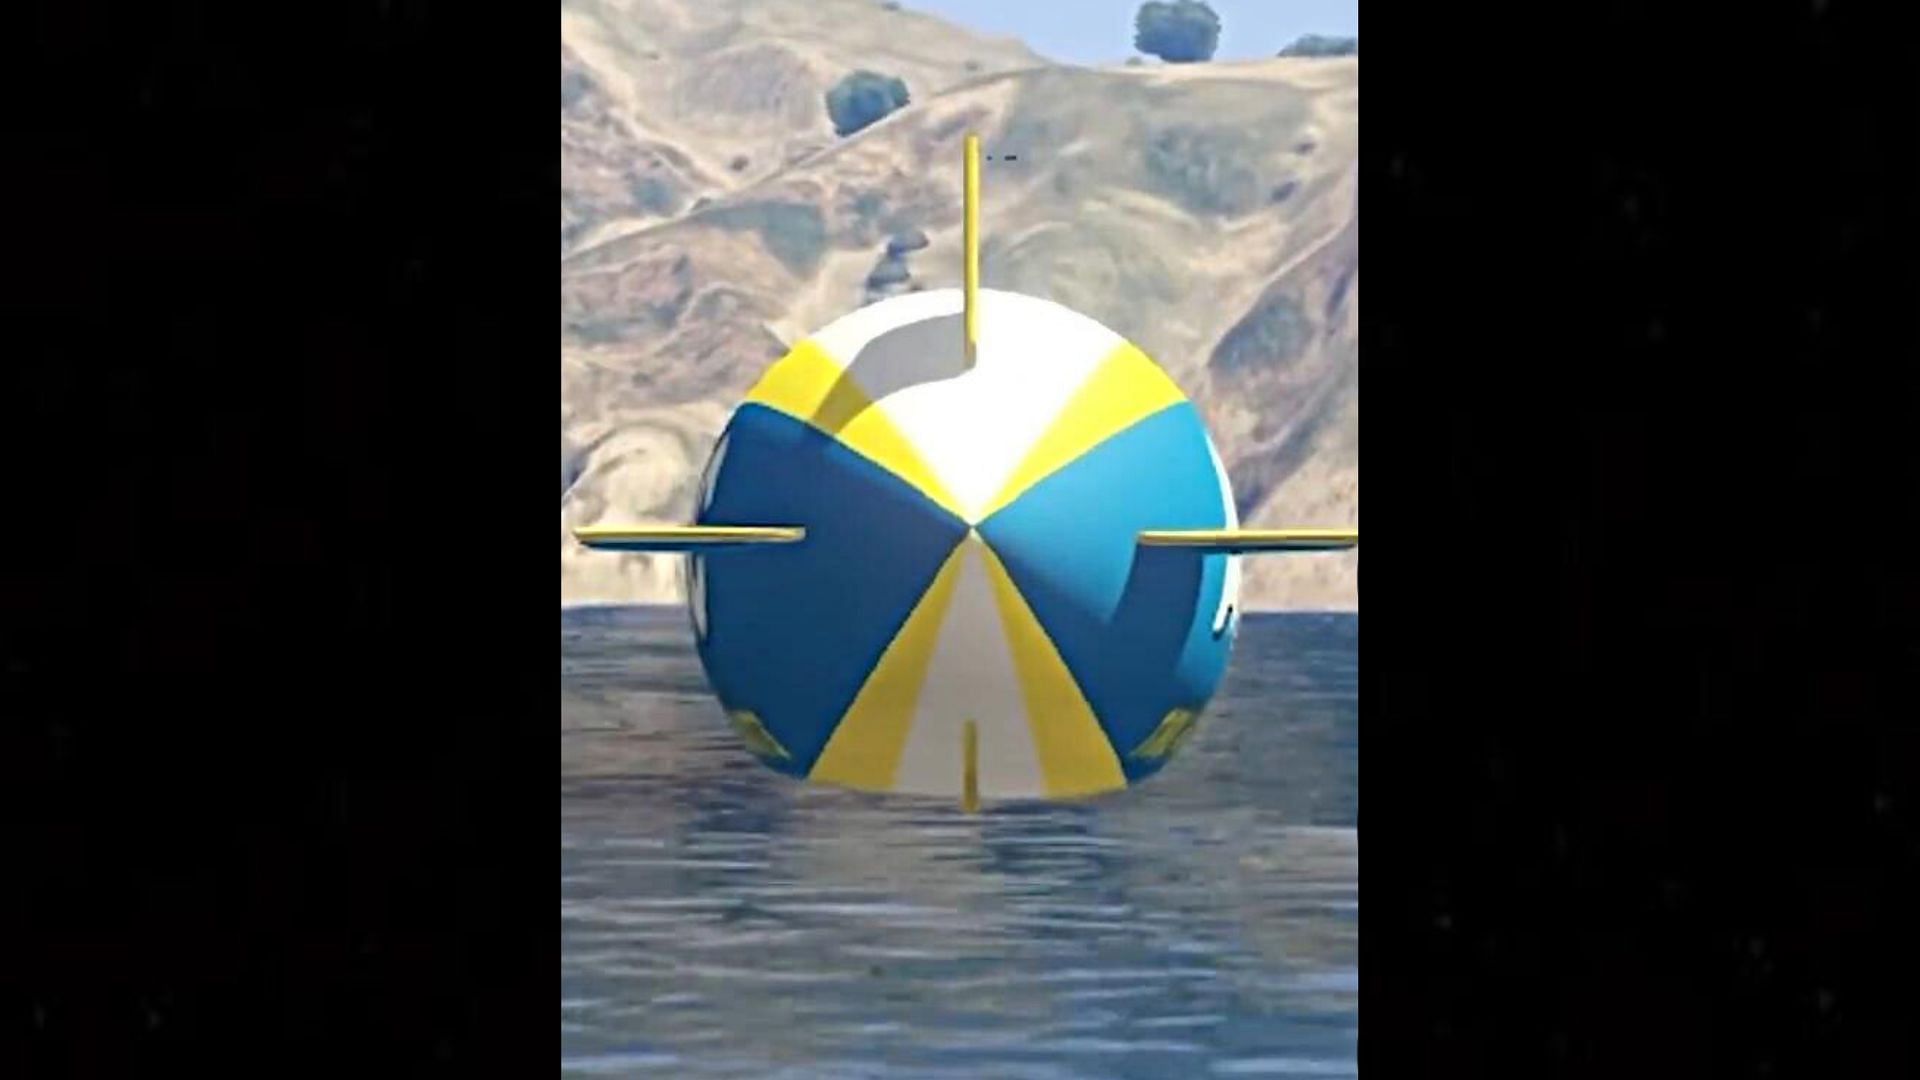 Blimp floating (Image via YouTube/GrayStillPlays)